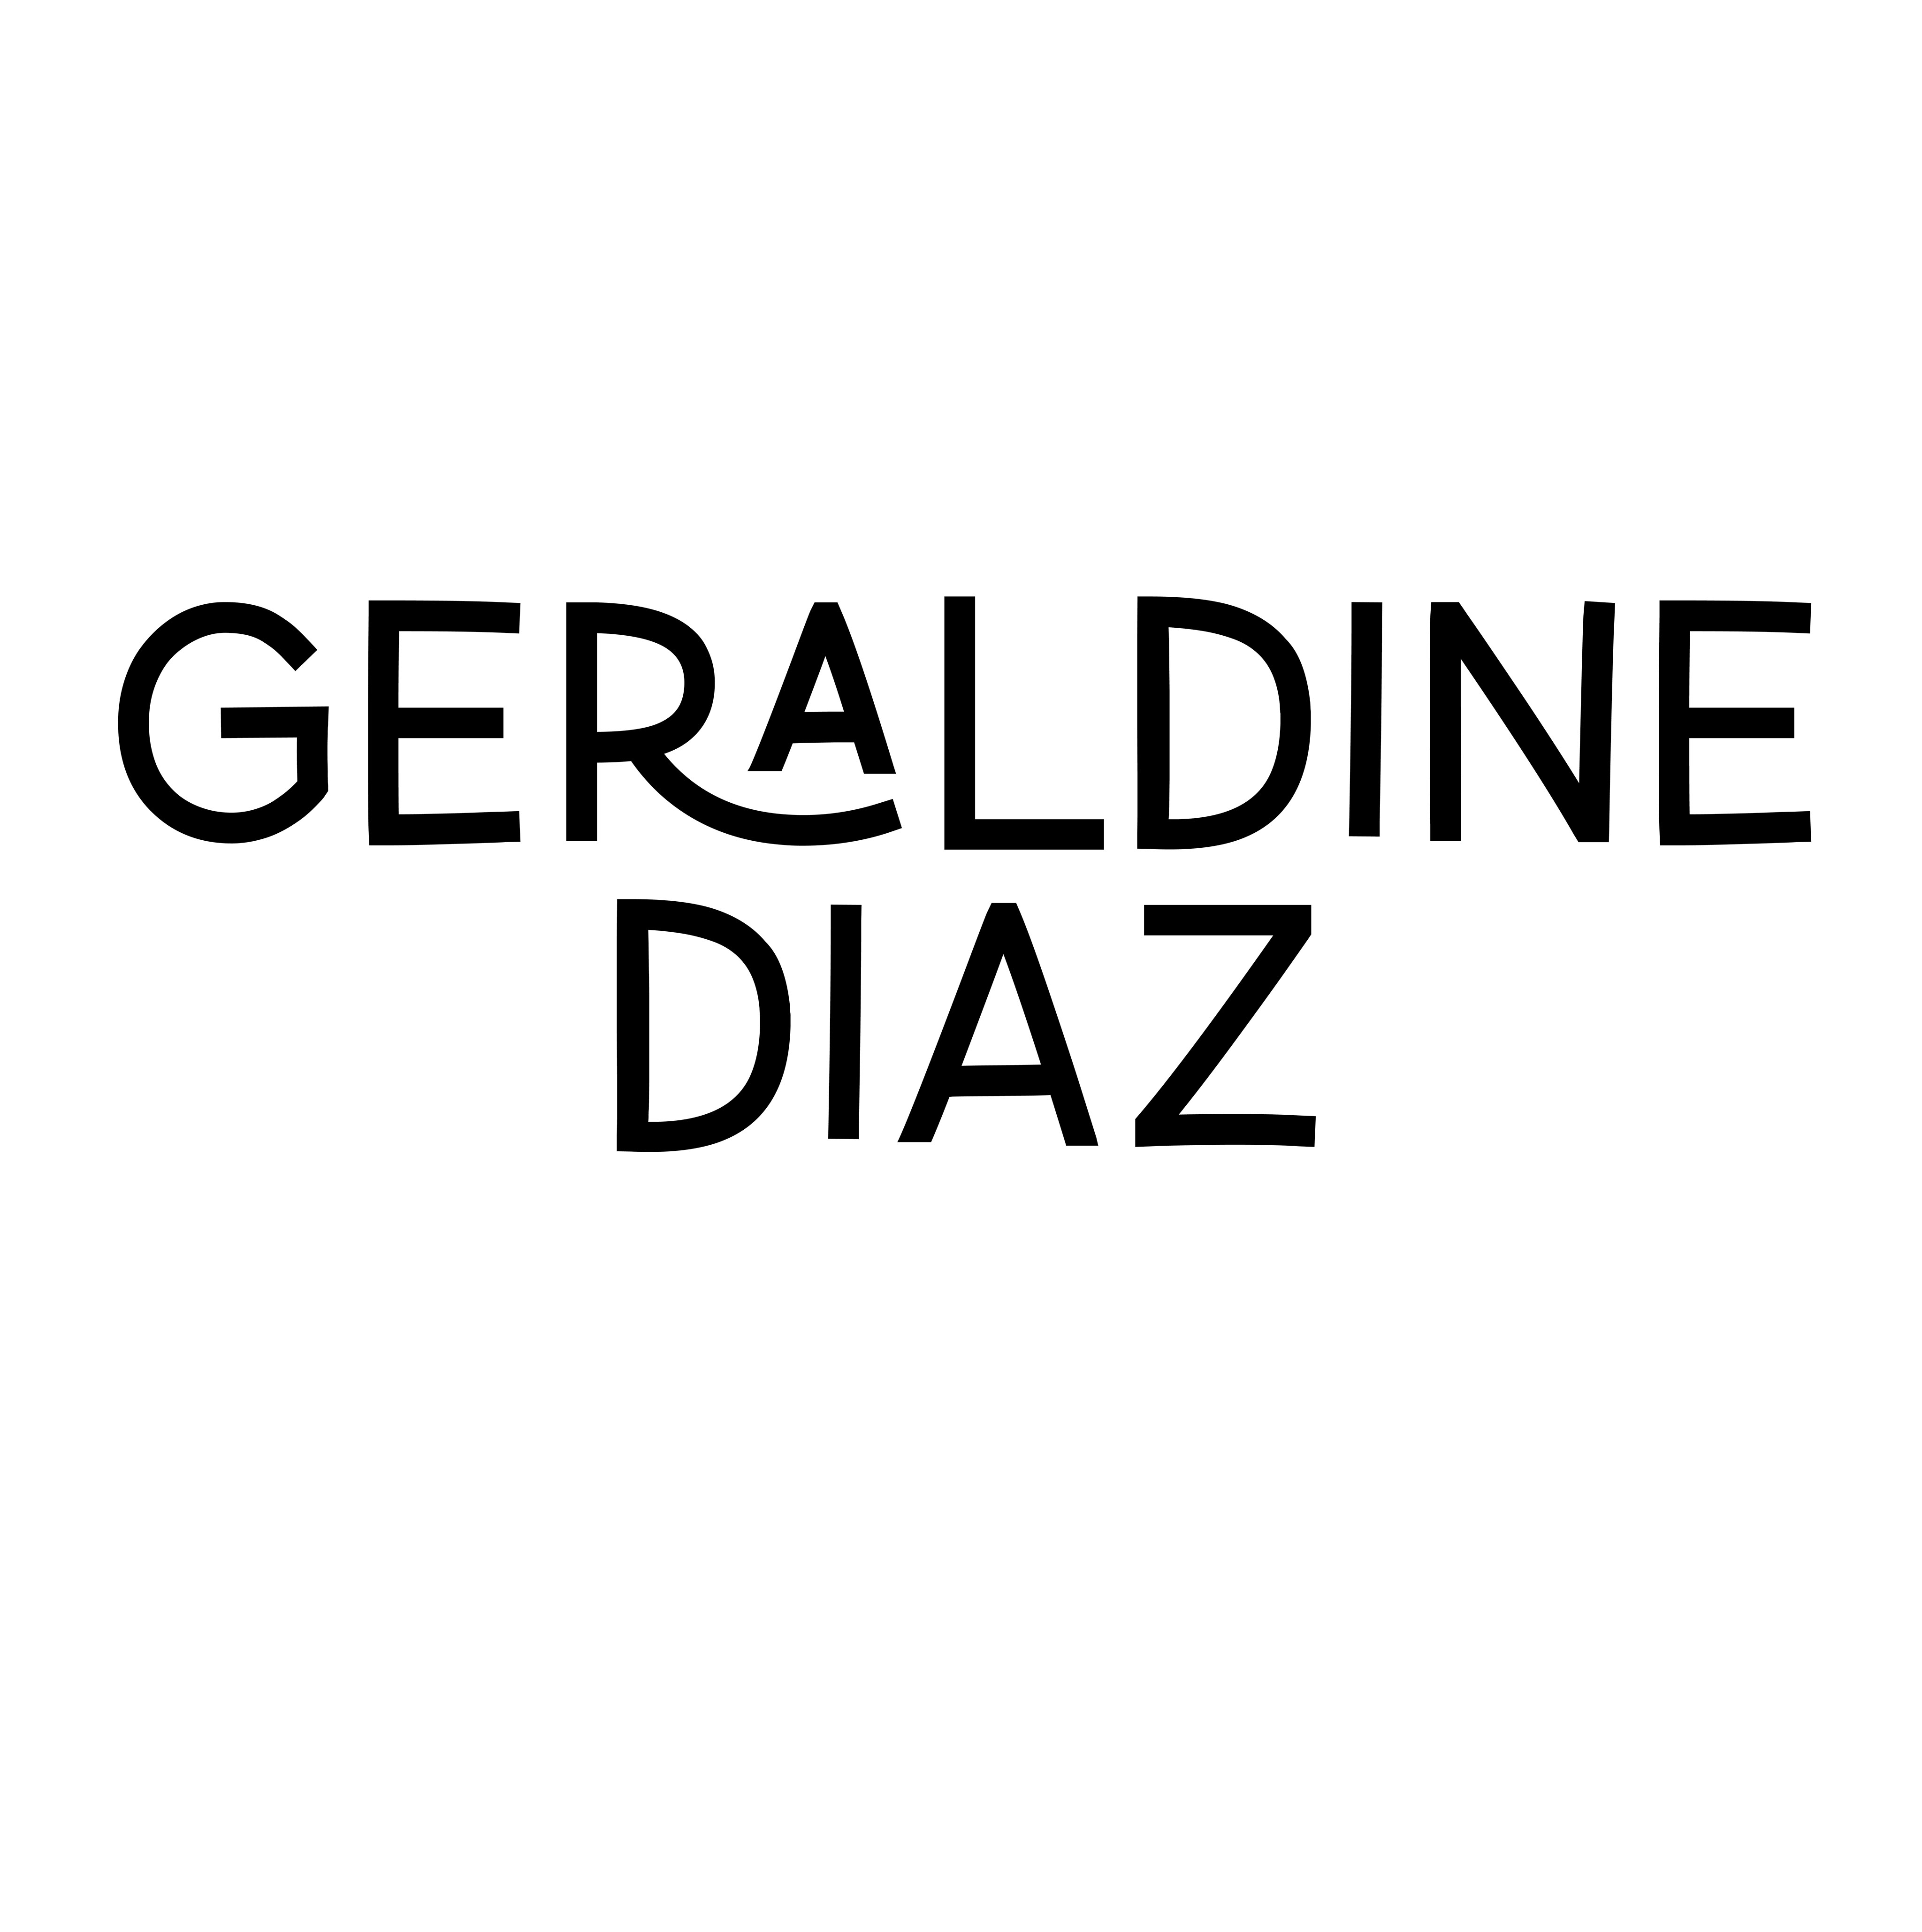 Geraldine Diaz